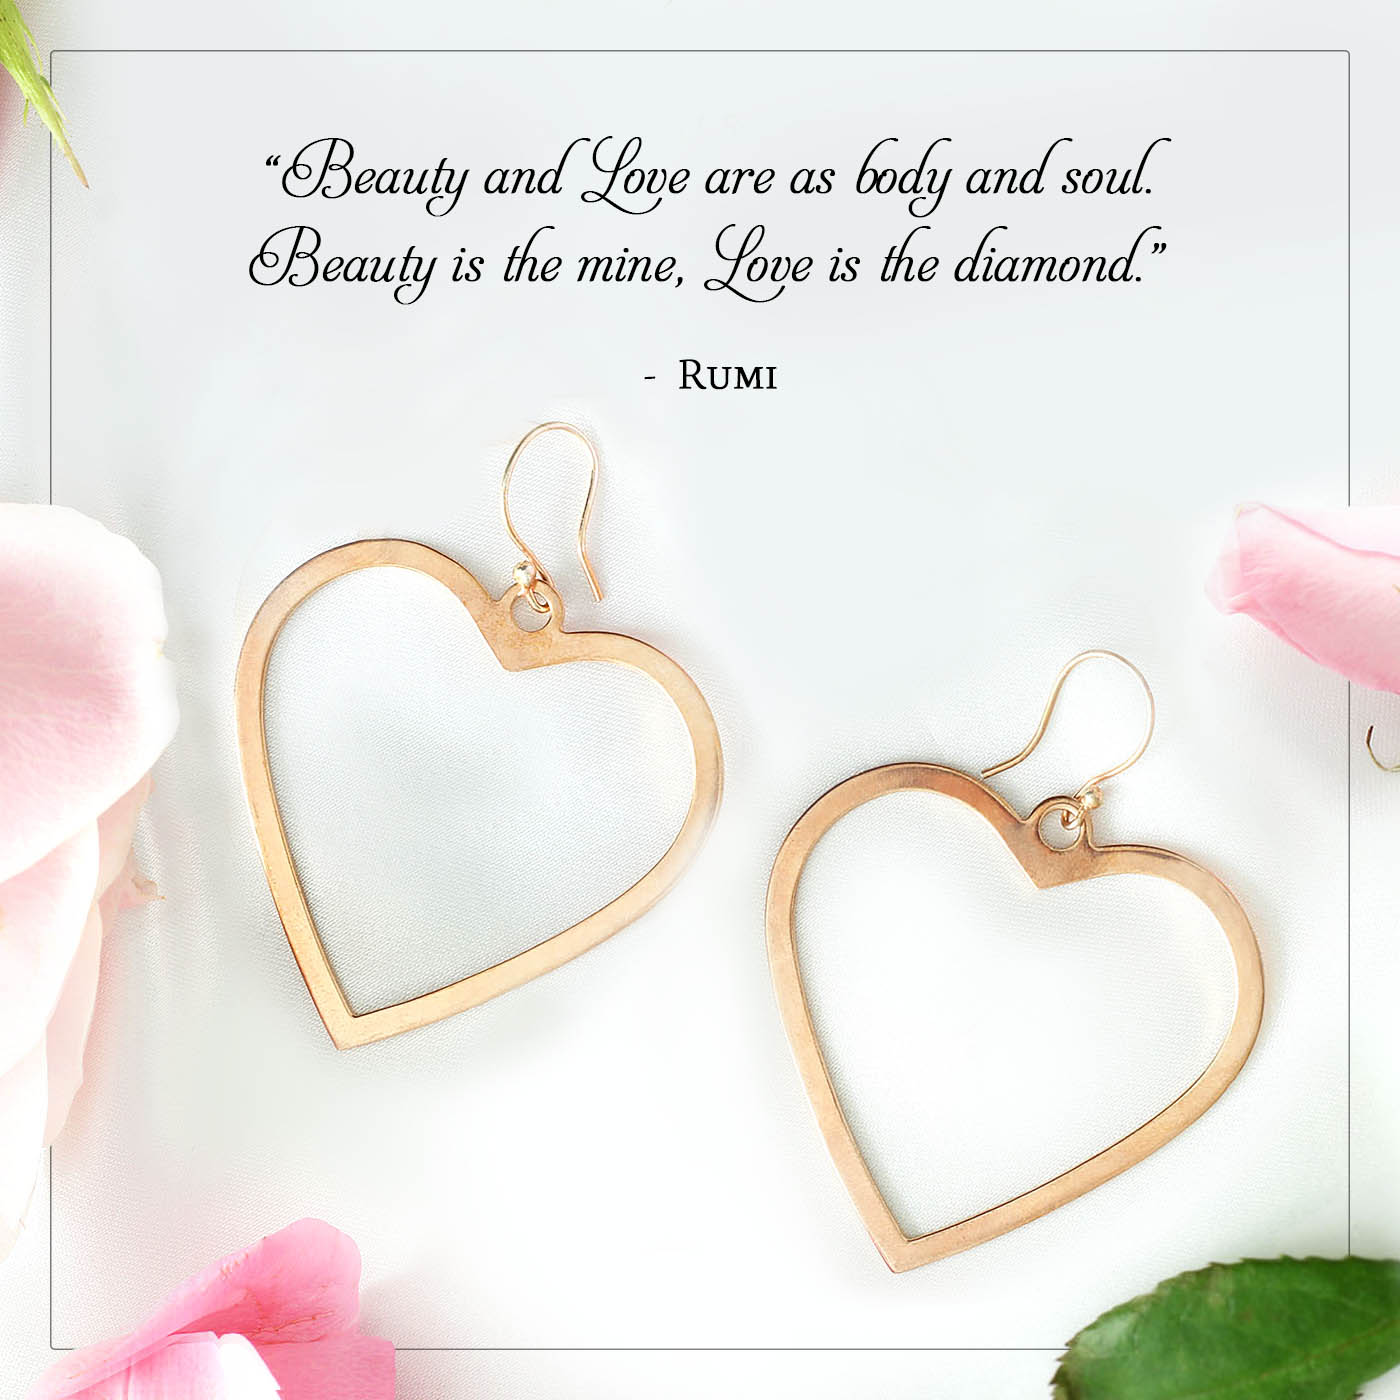 Rumi love quote